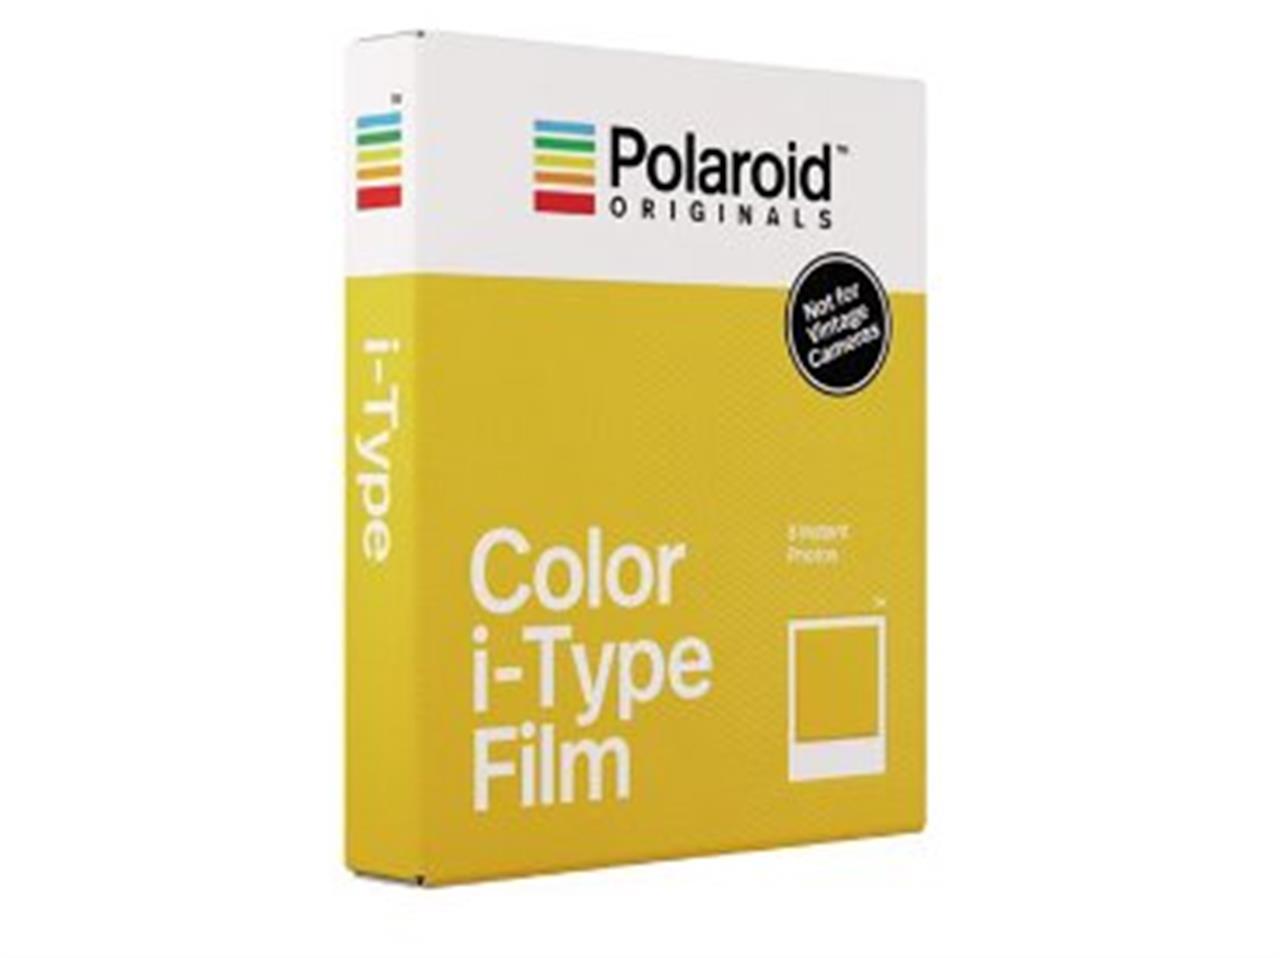 9120066087713__polaroid_color_i-type_film.jpg